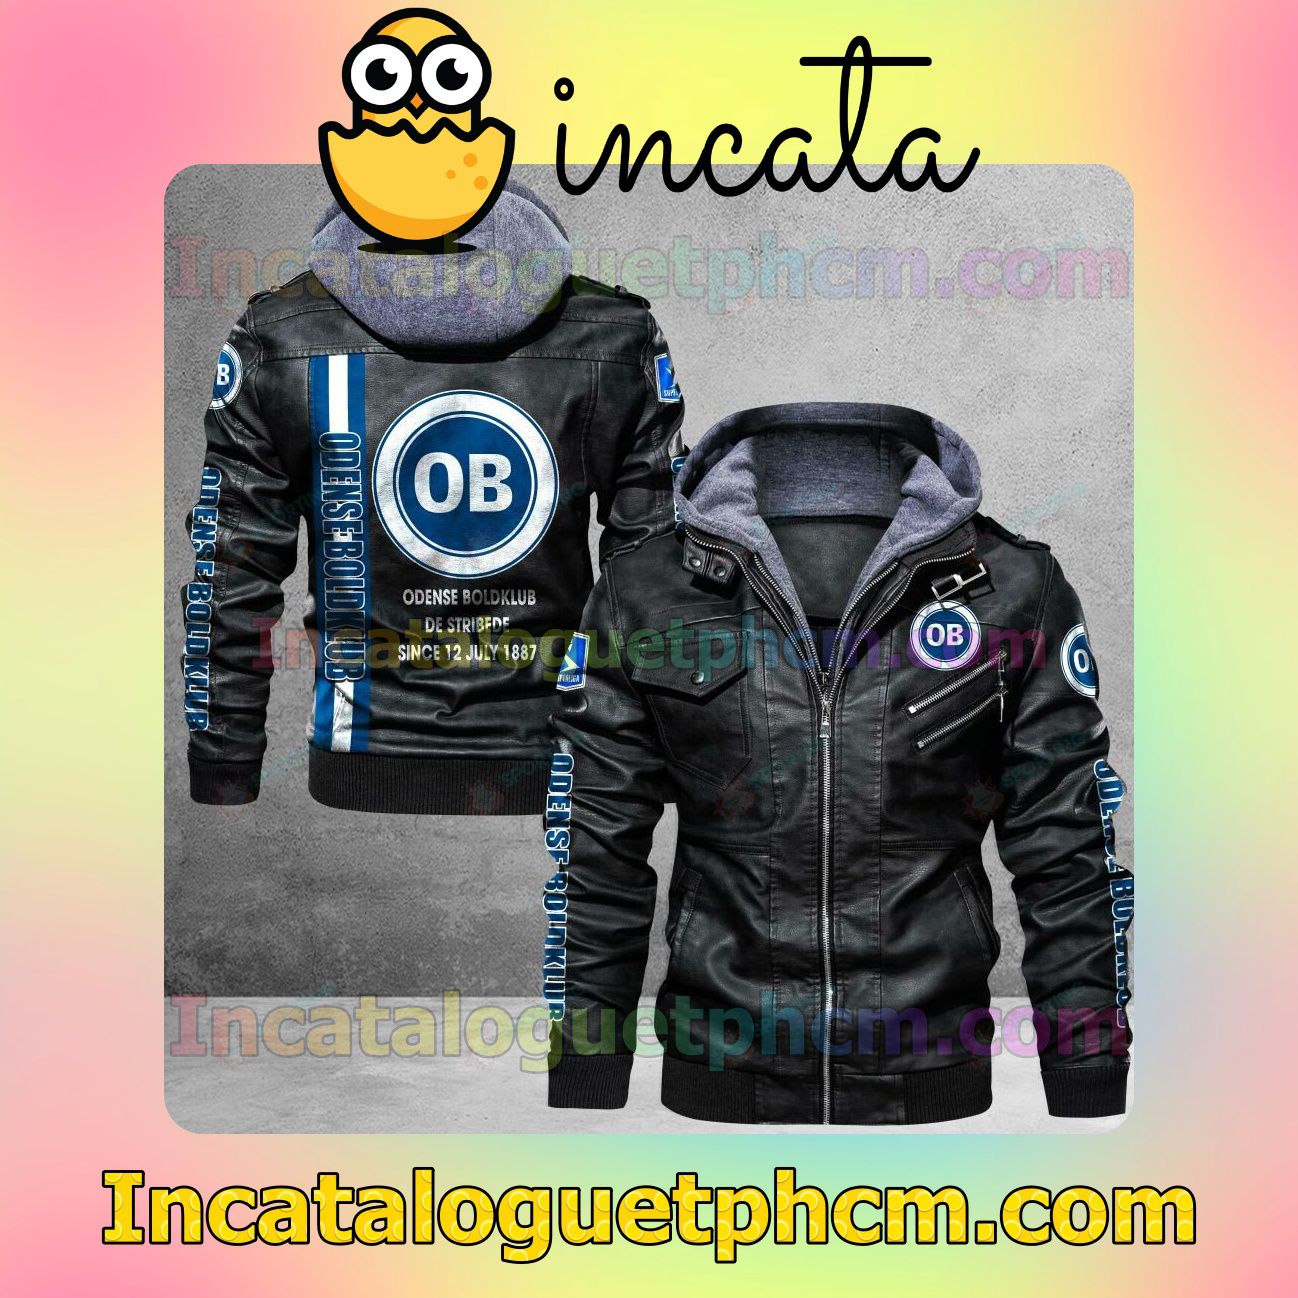 Odense Boldklub Brand Uniform Leather Jacket